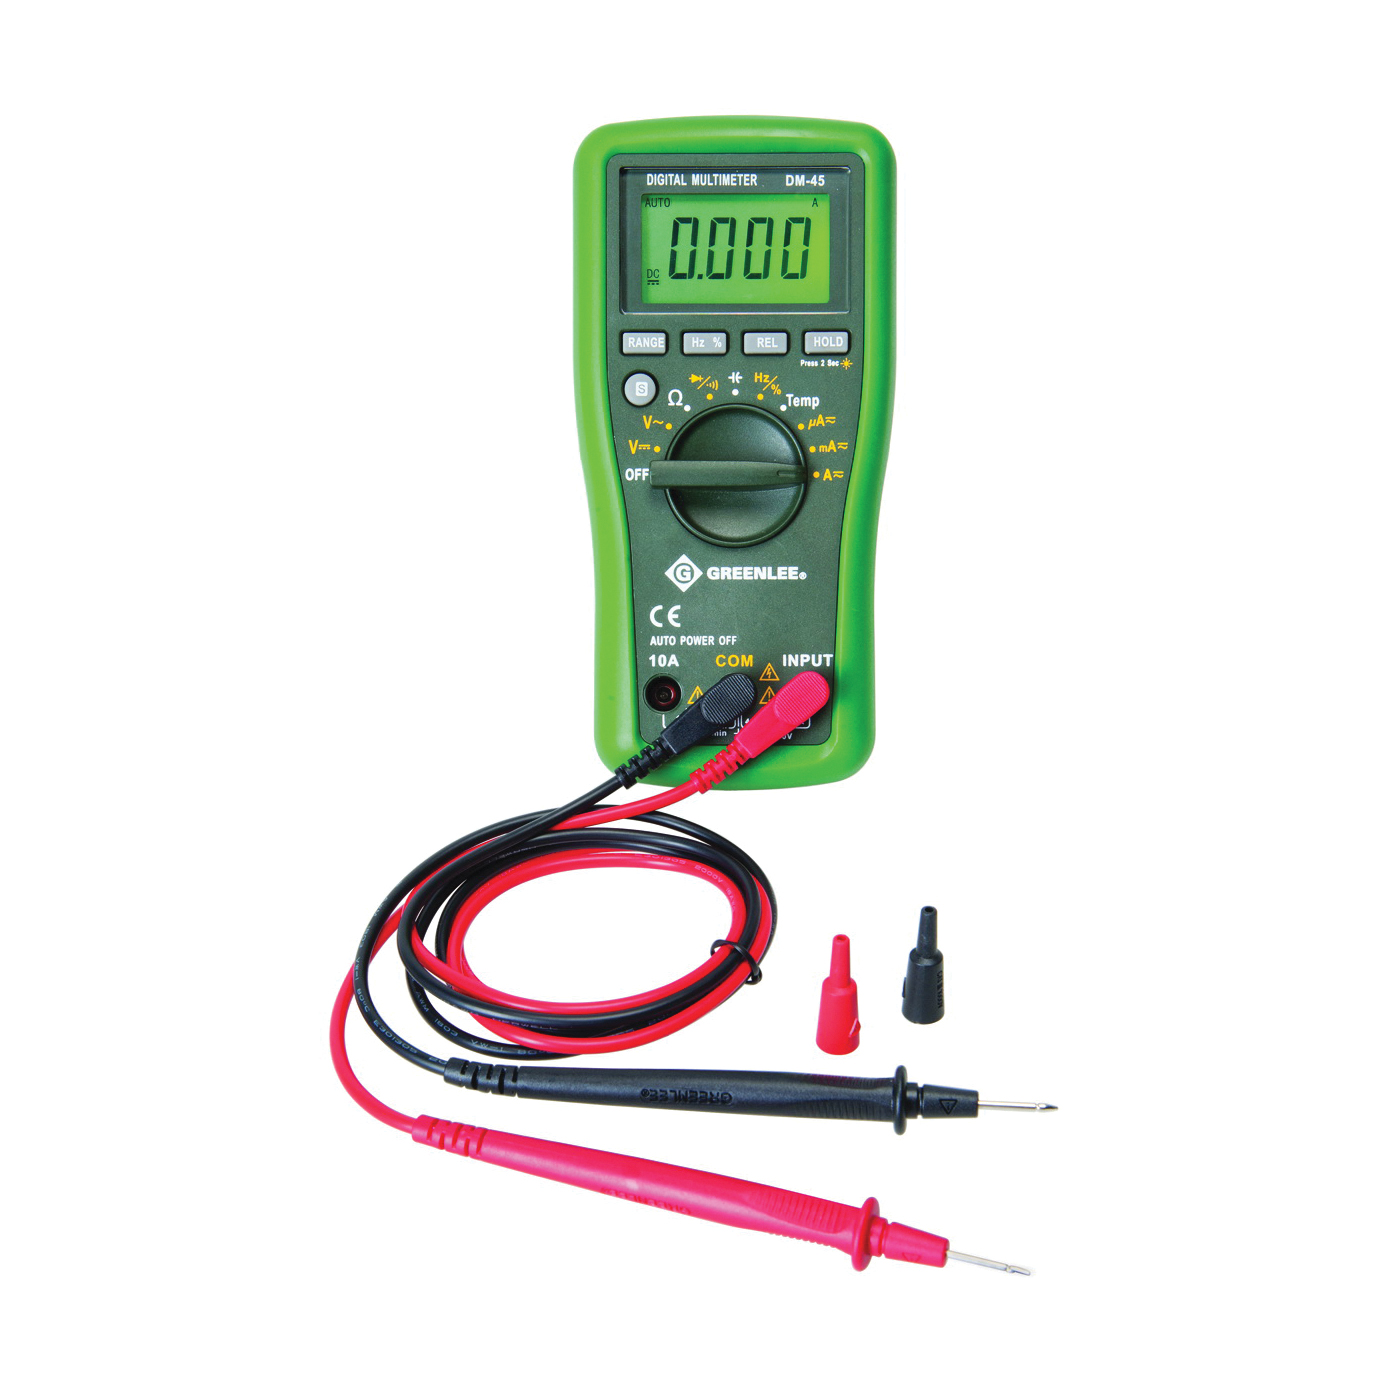 DM-45 Multimeter, Digital Display, Functions: AC Voltage, DC Voltage, Capacitance, Current, Resistance